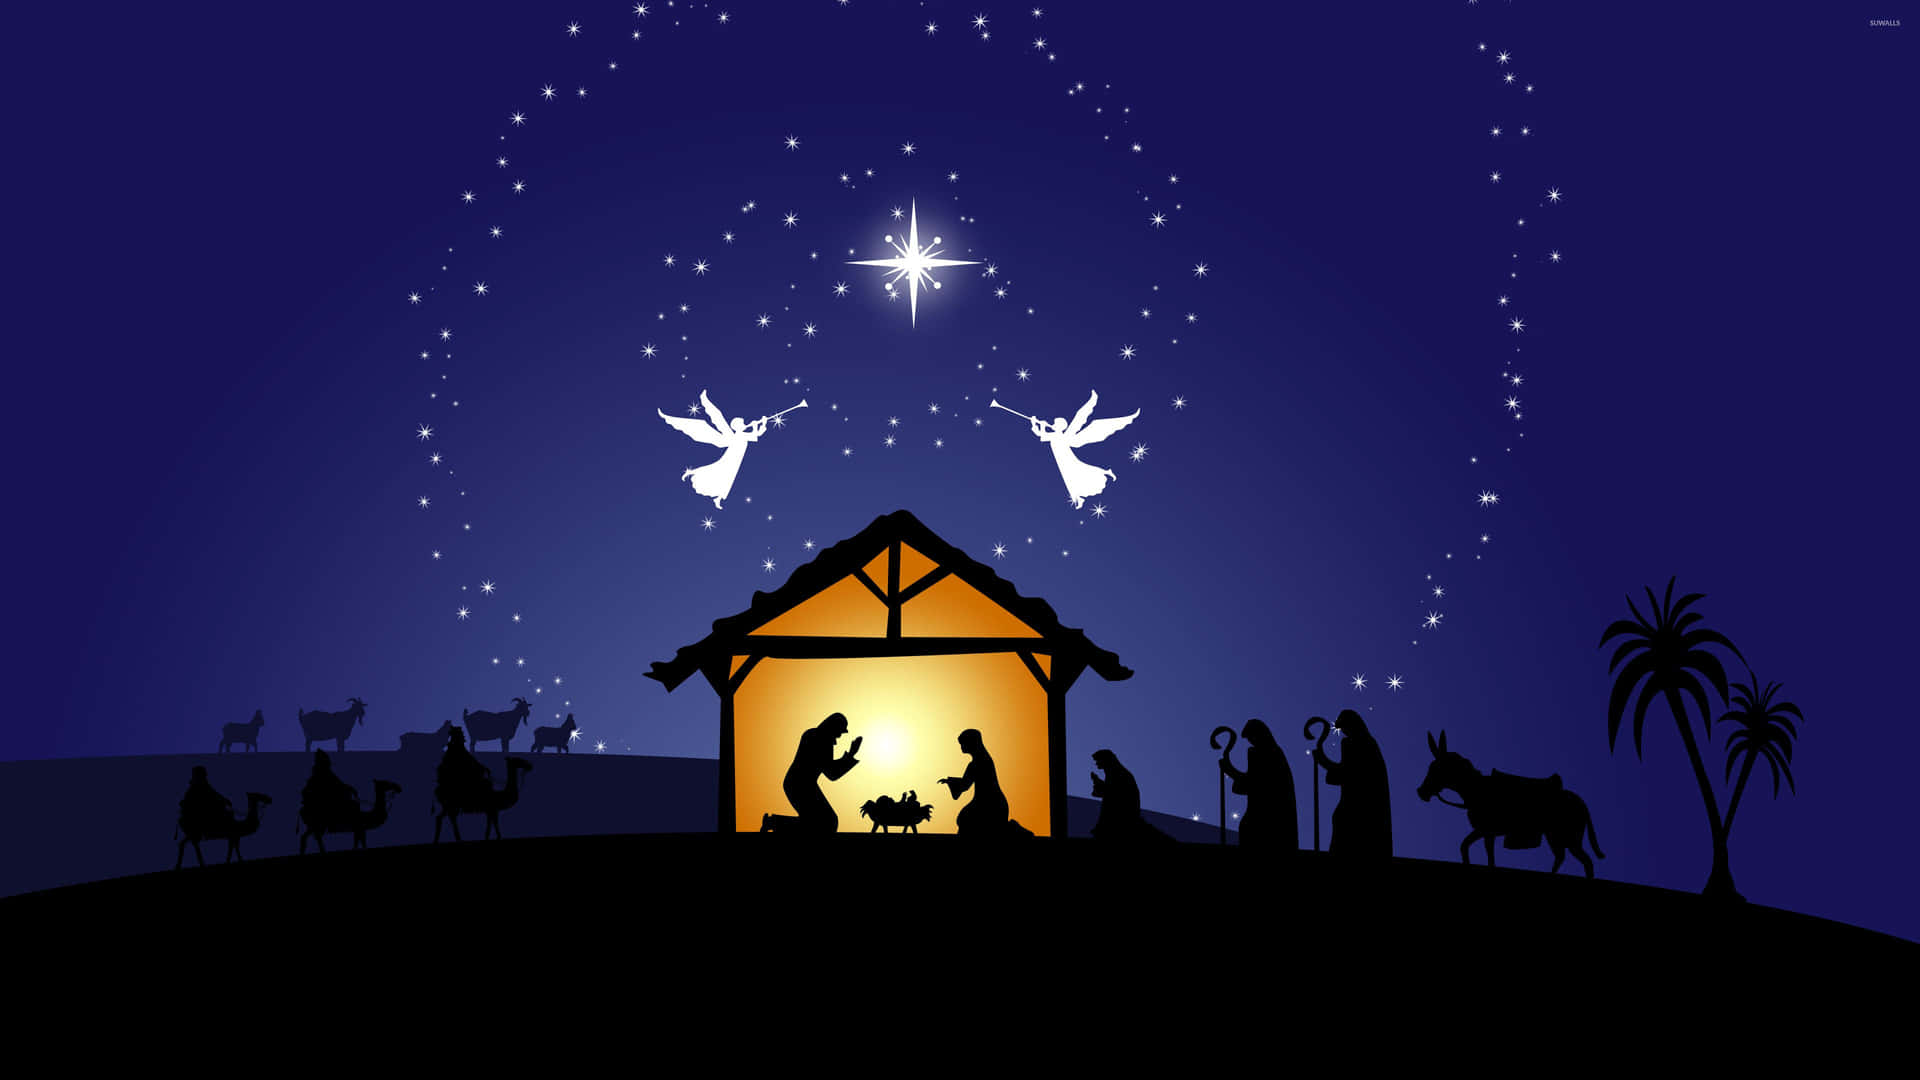 A child-like illustration of the Nativity